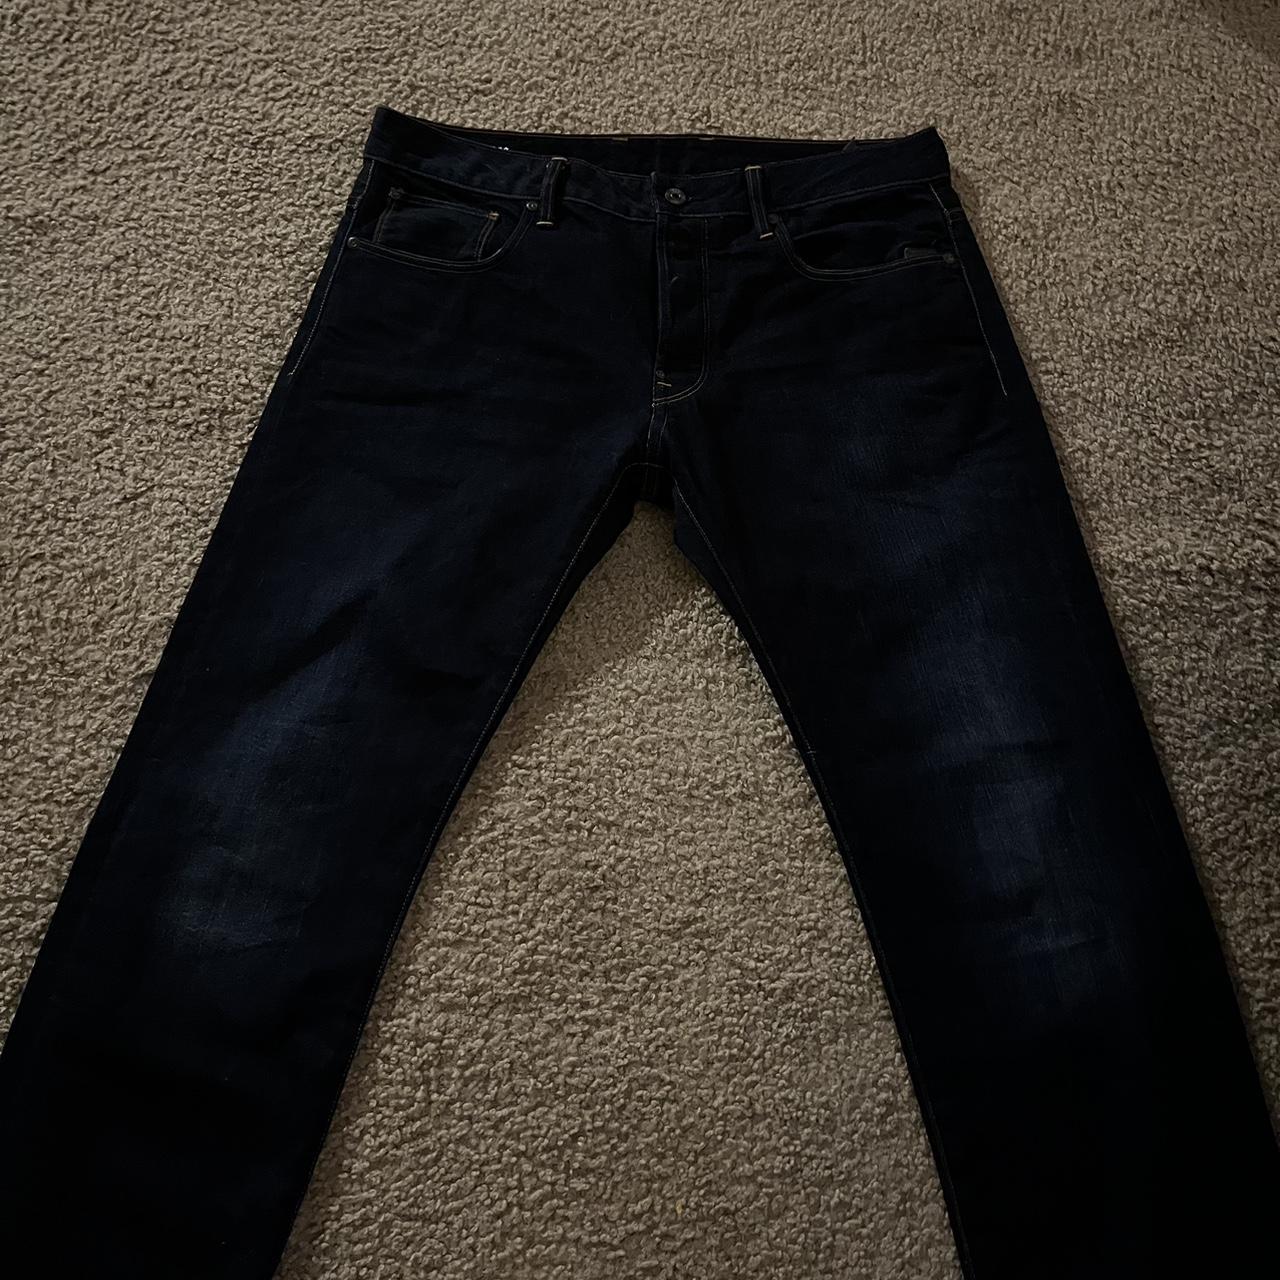 Raw g star straight leg dark wash jeans length - 32... - Depop